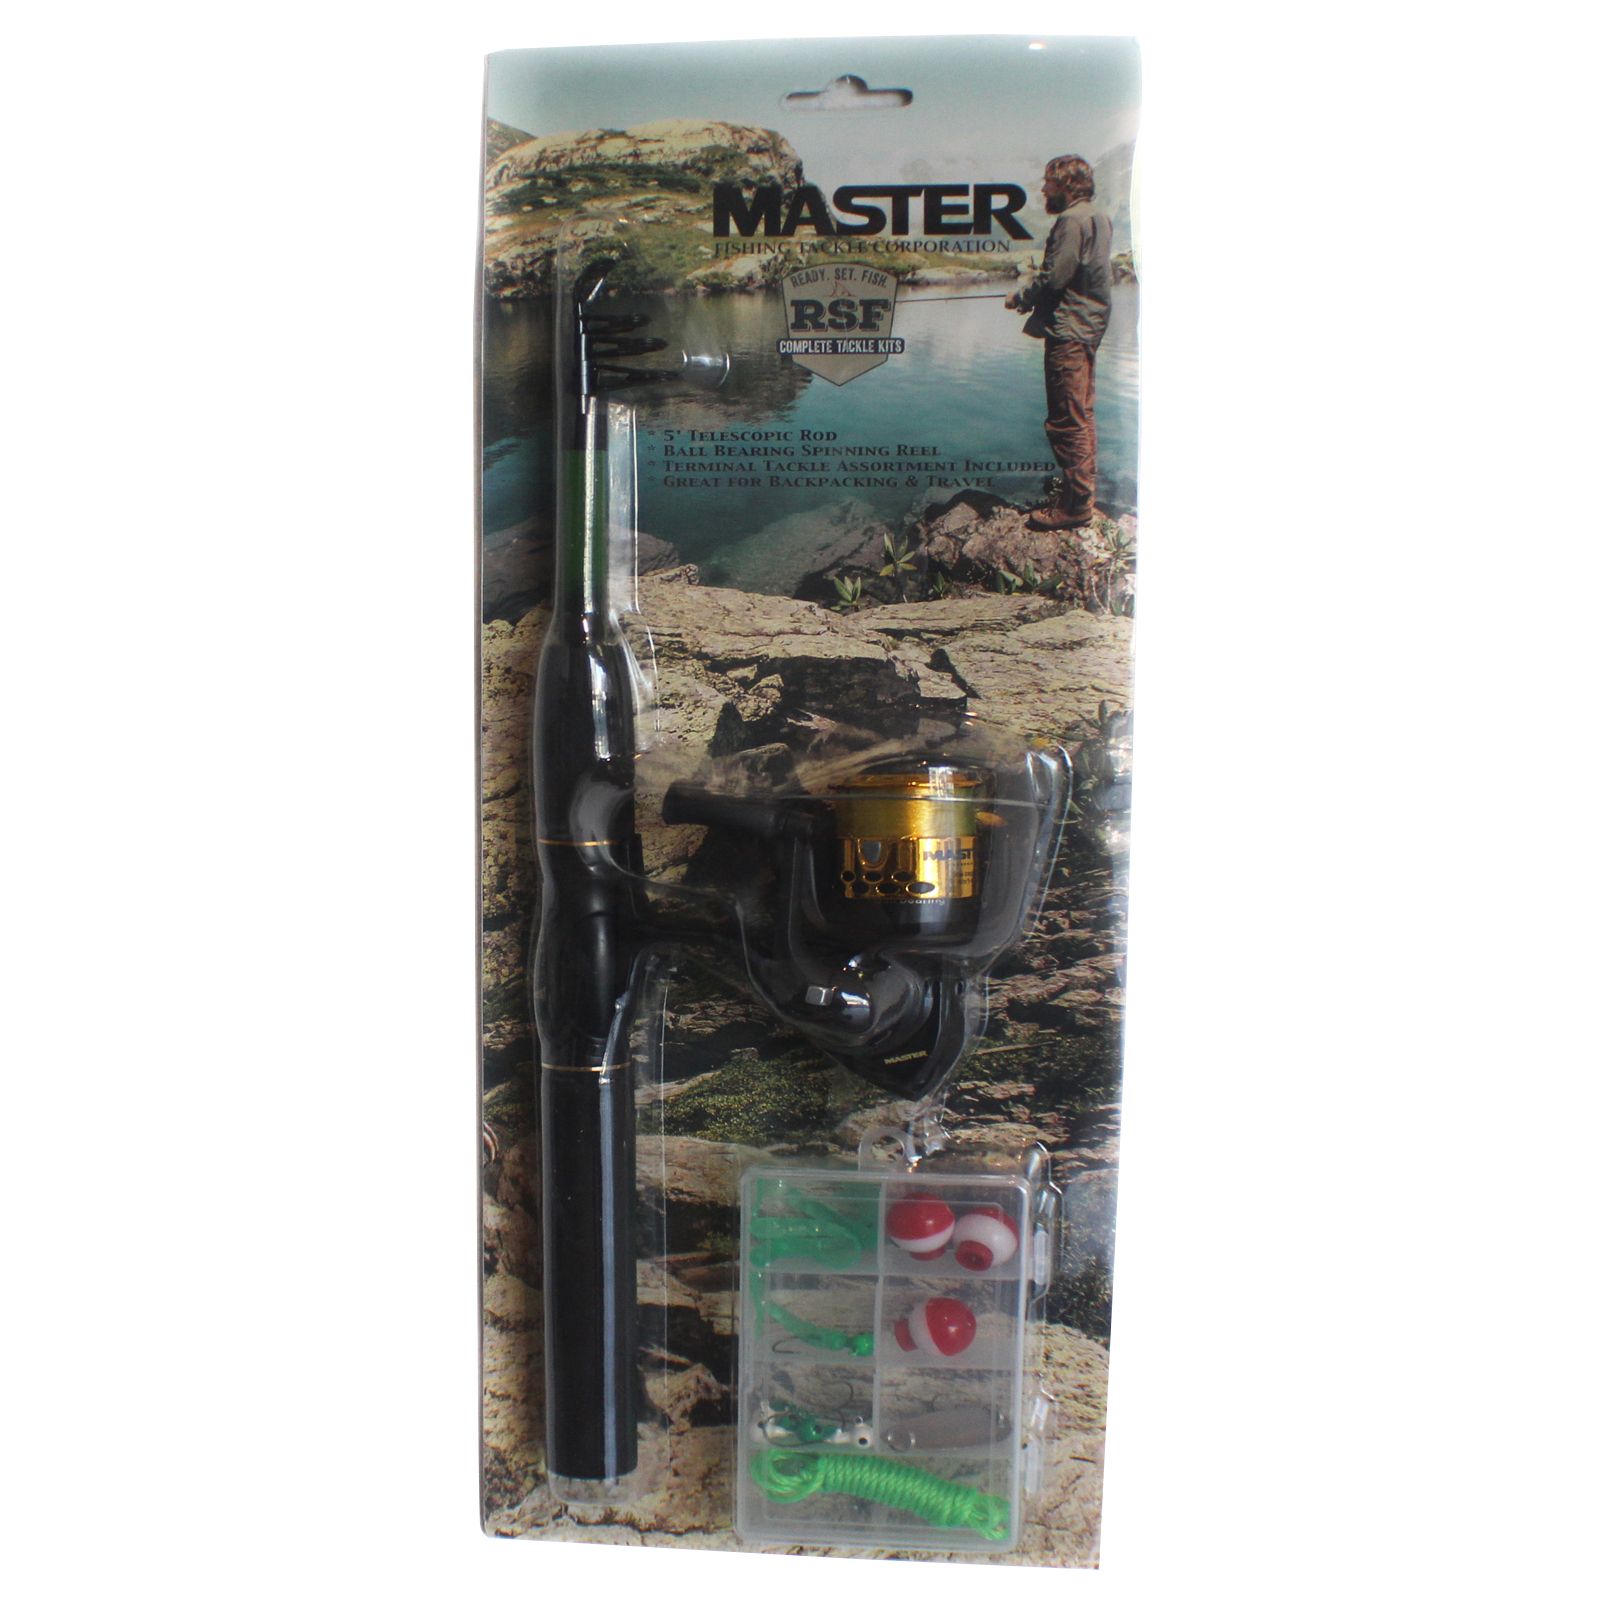 Fishing Rod Set, Portable Fishing Combo with Case